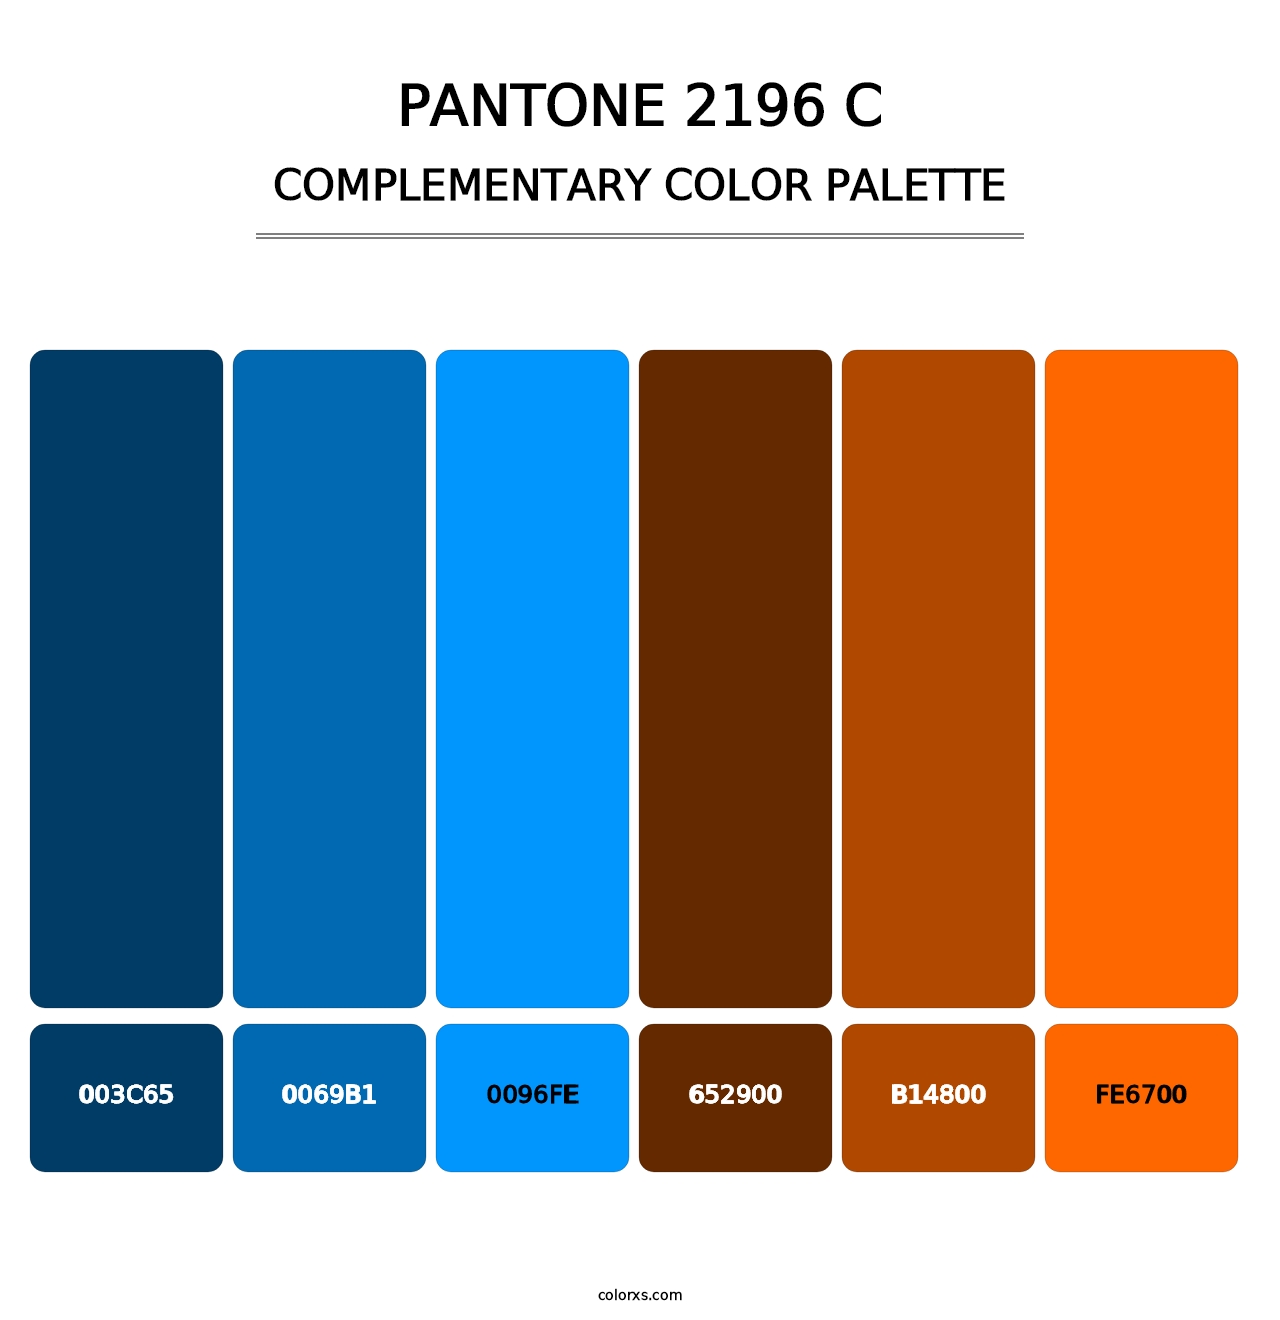 PANTONE 2196 C - Complementary Color Palette